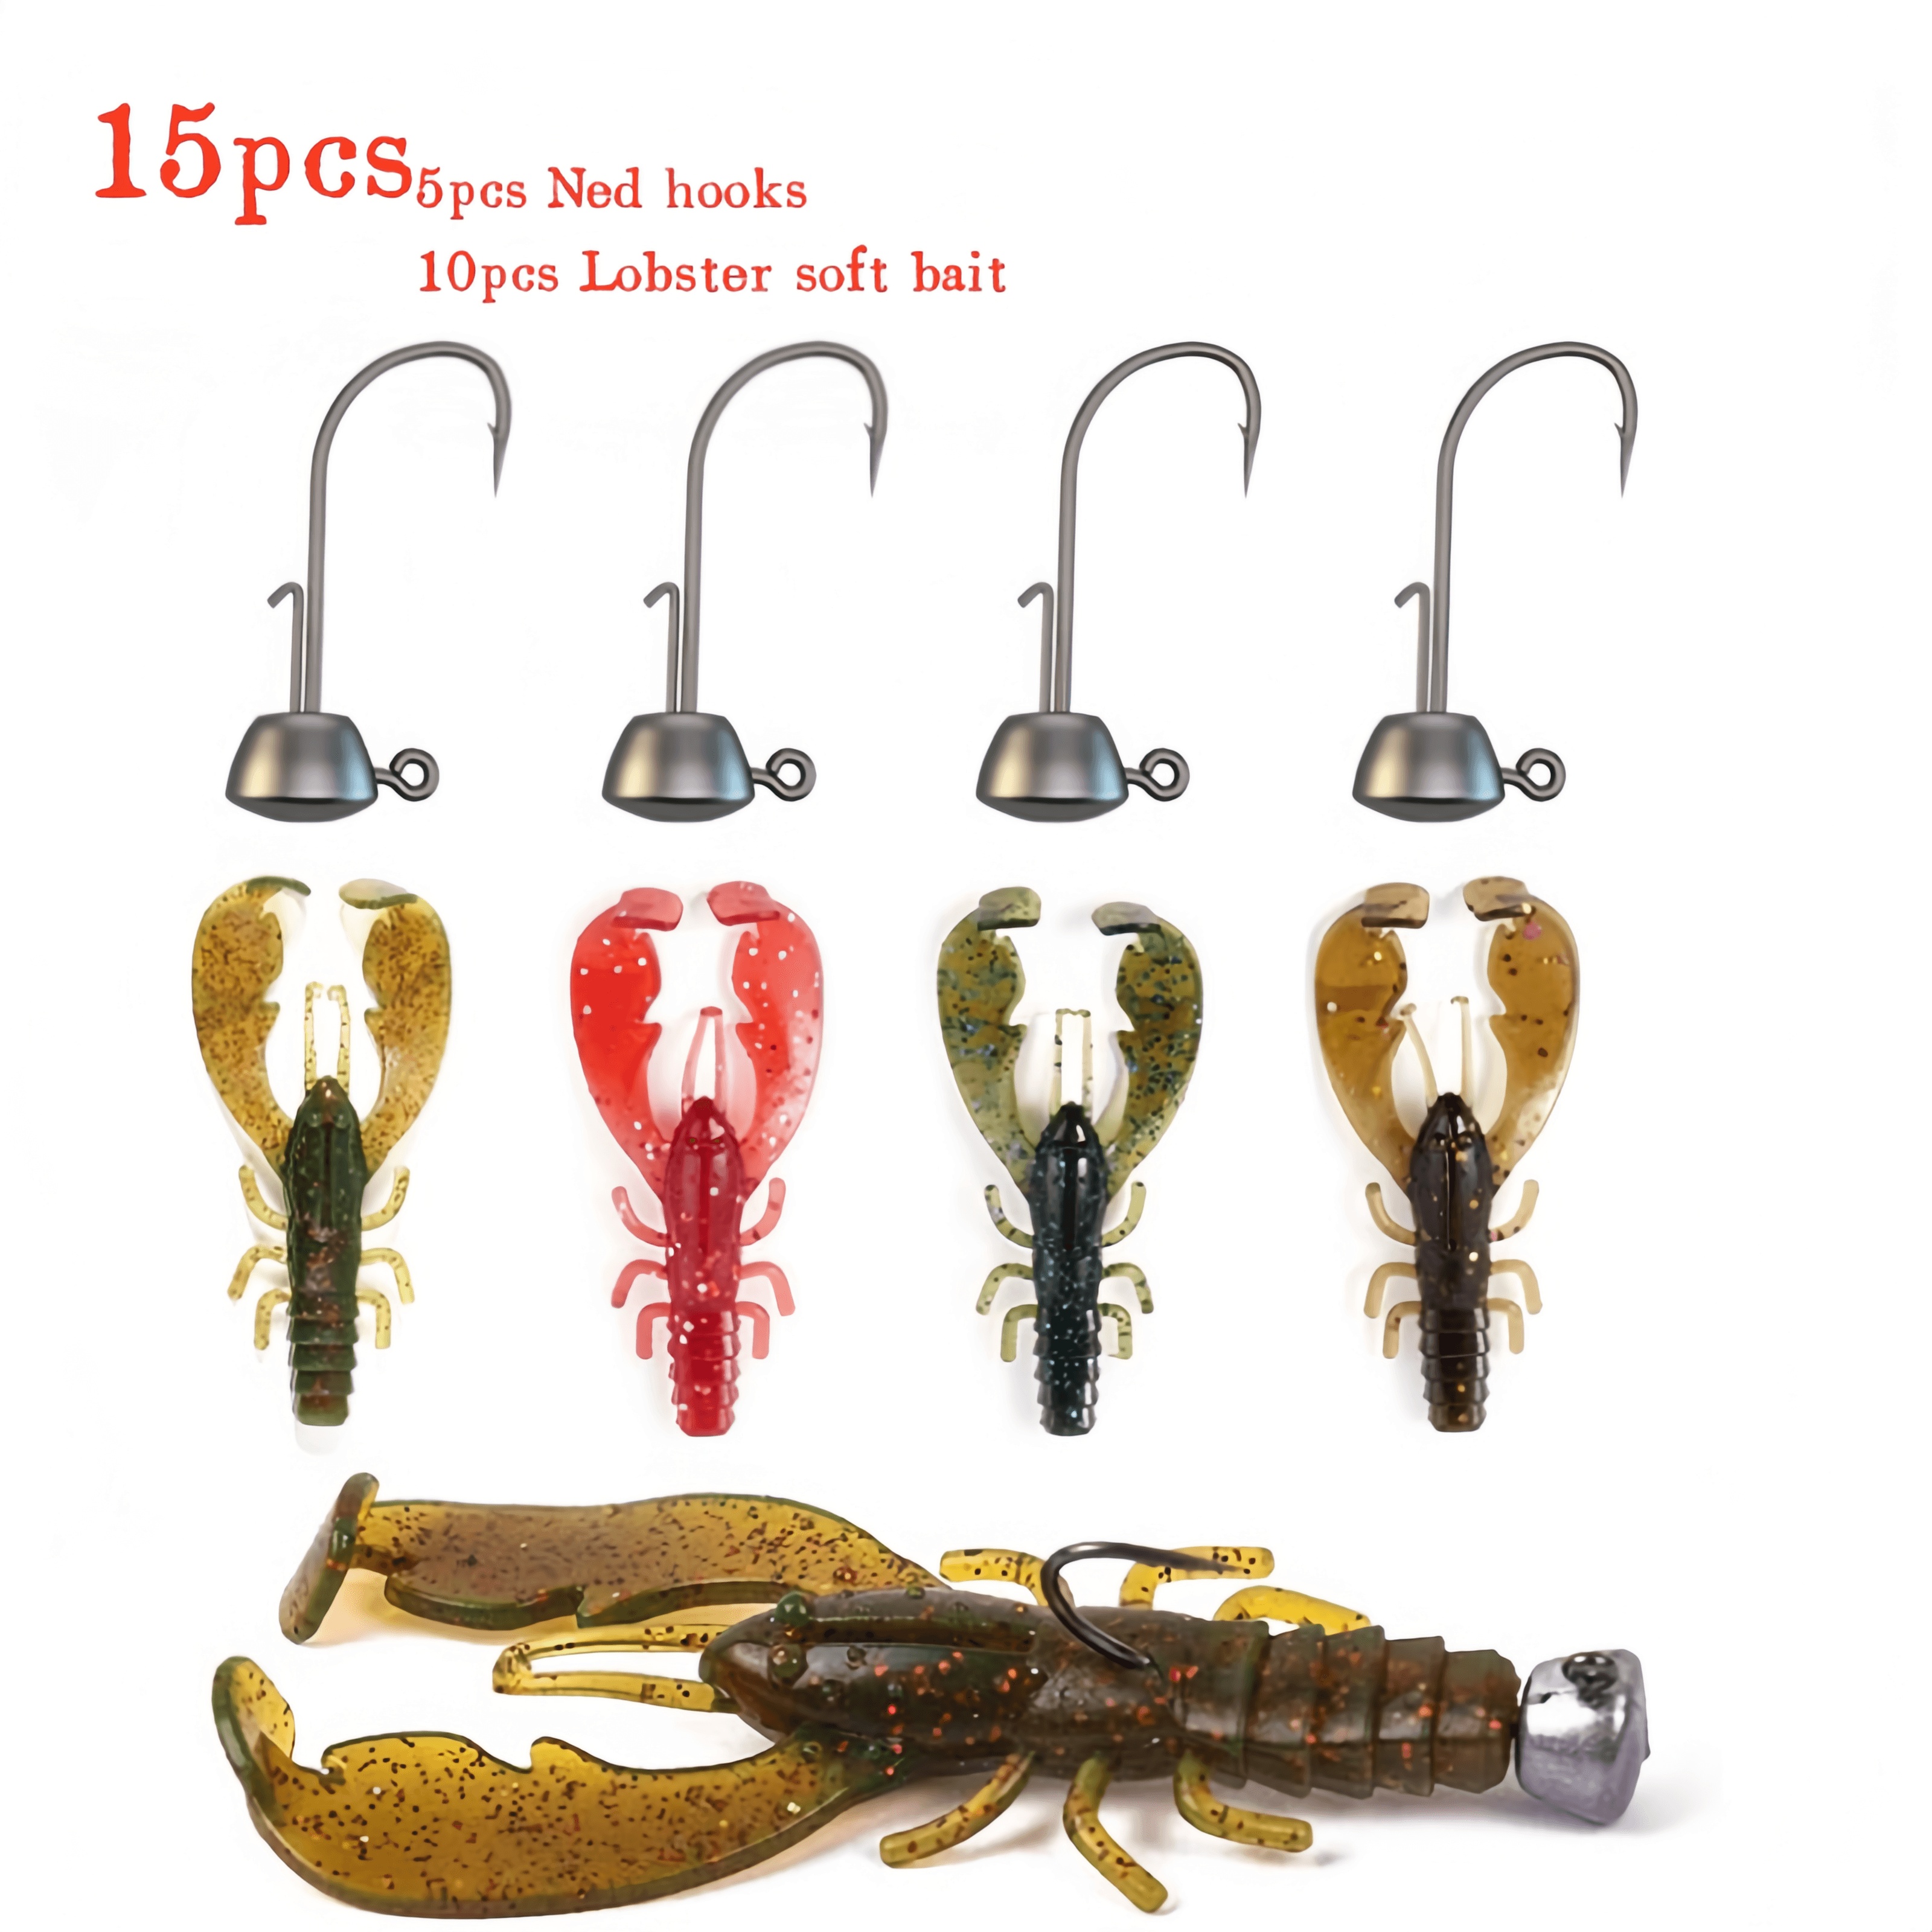 15pcs/set Ned Rig Baits Kit, Bionic Soft Crawfish And Ned Jig Head Hook For  Bass Fishing